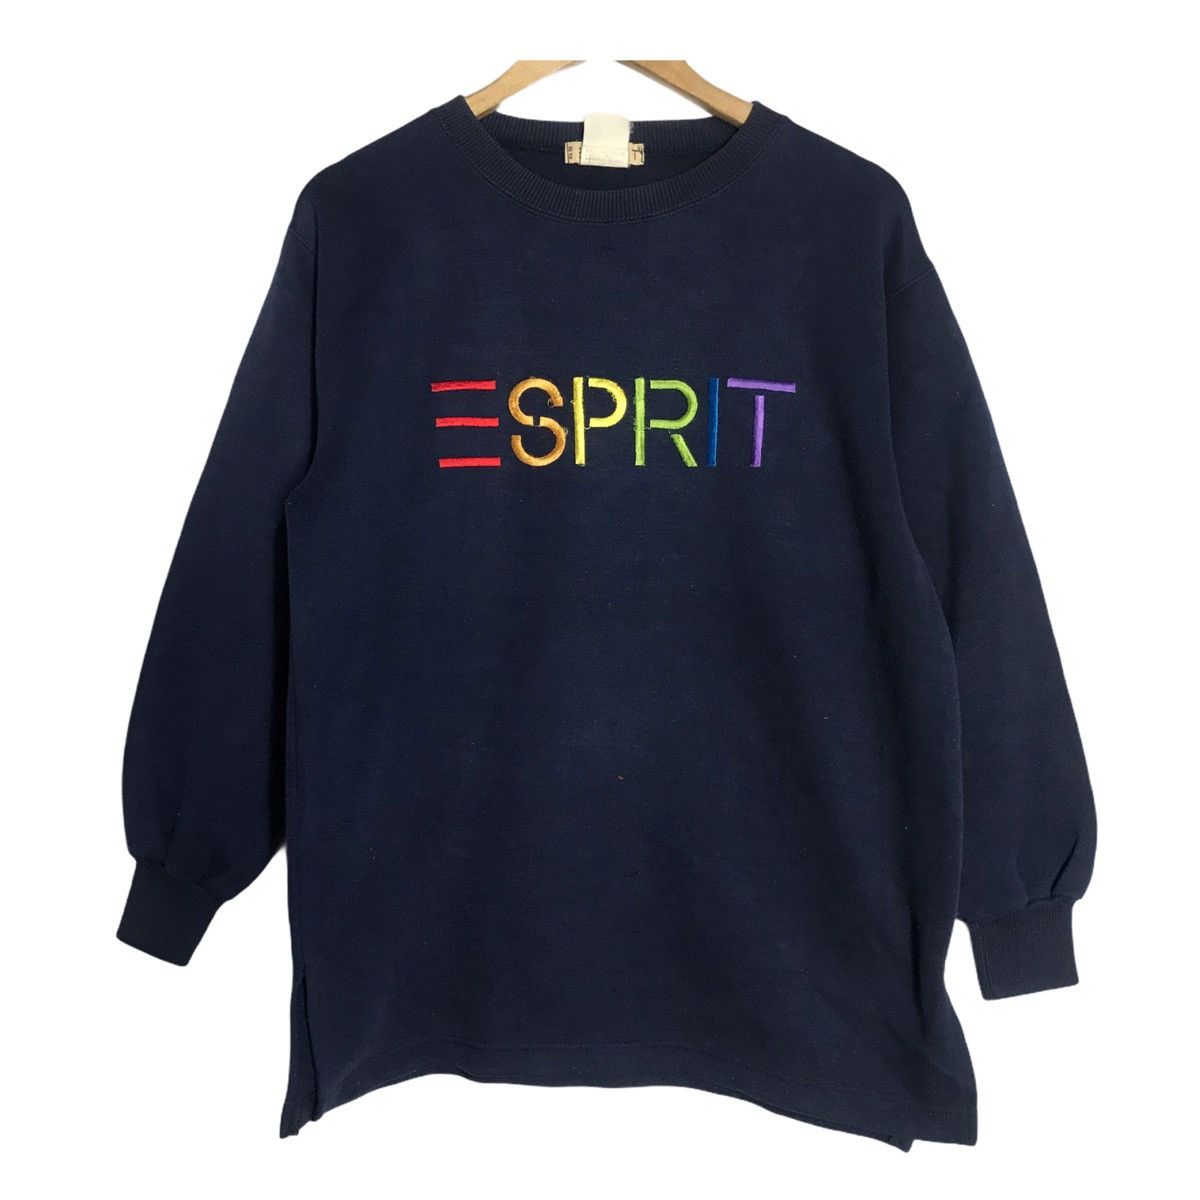 Vintage 90s Esprit Sweatshirt